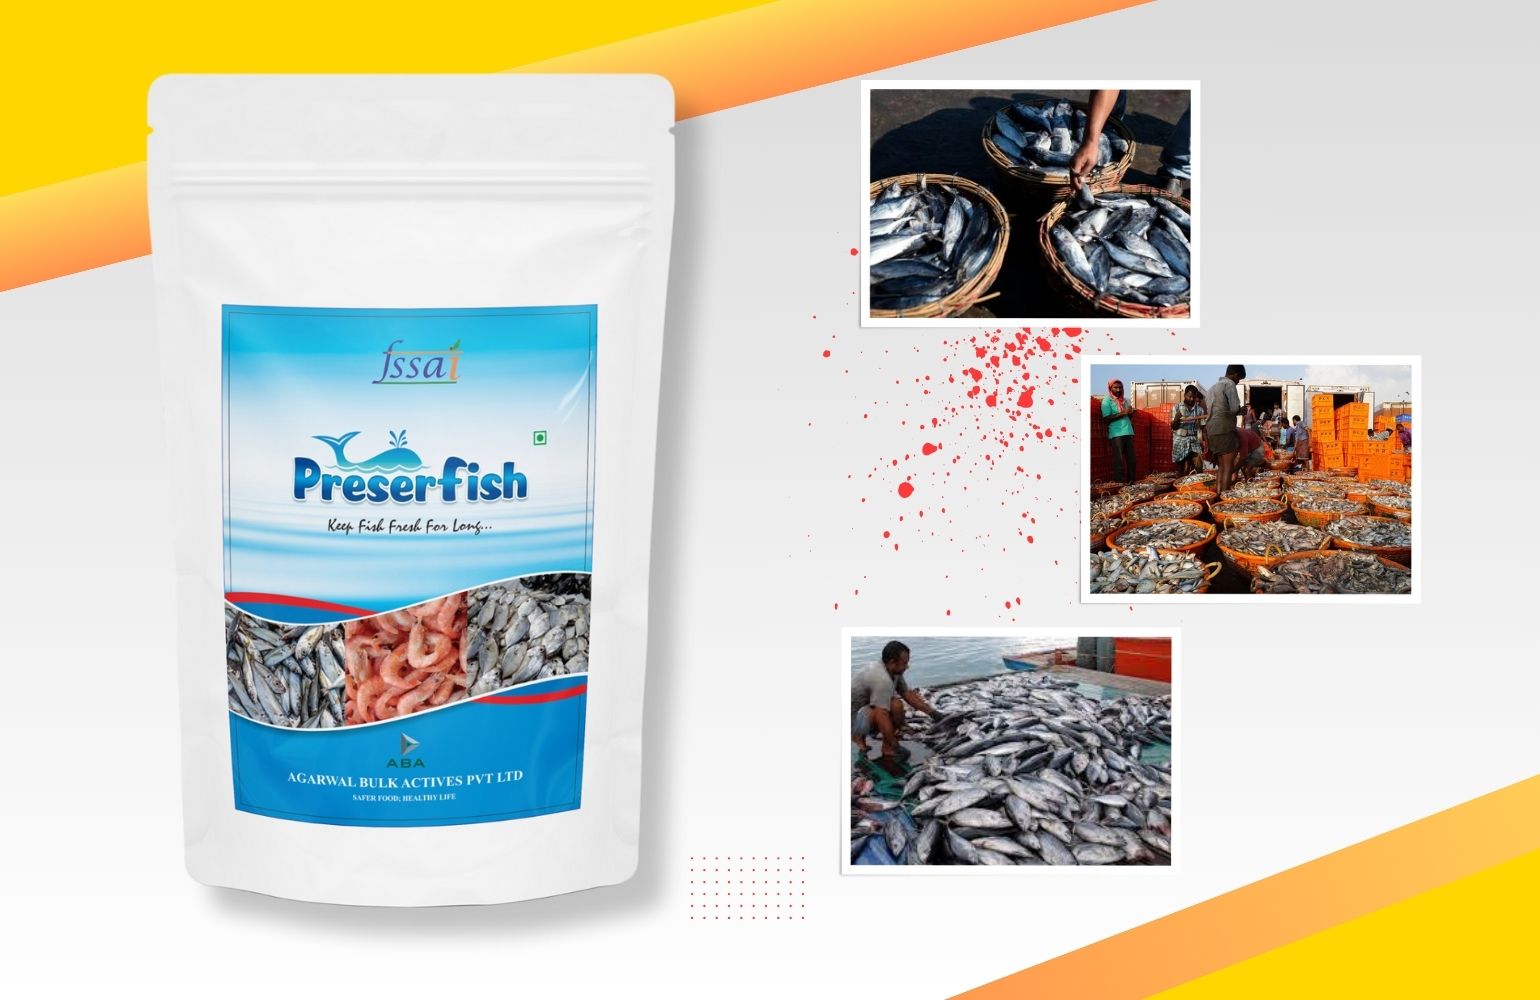 Preserfish brand